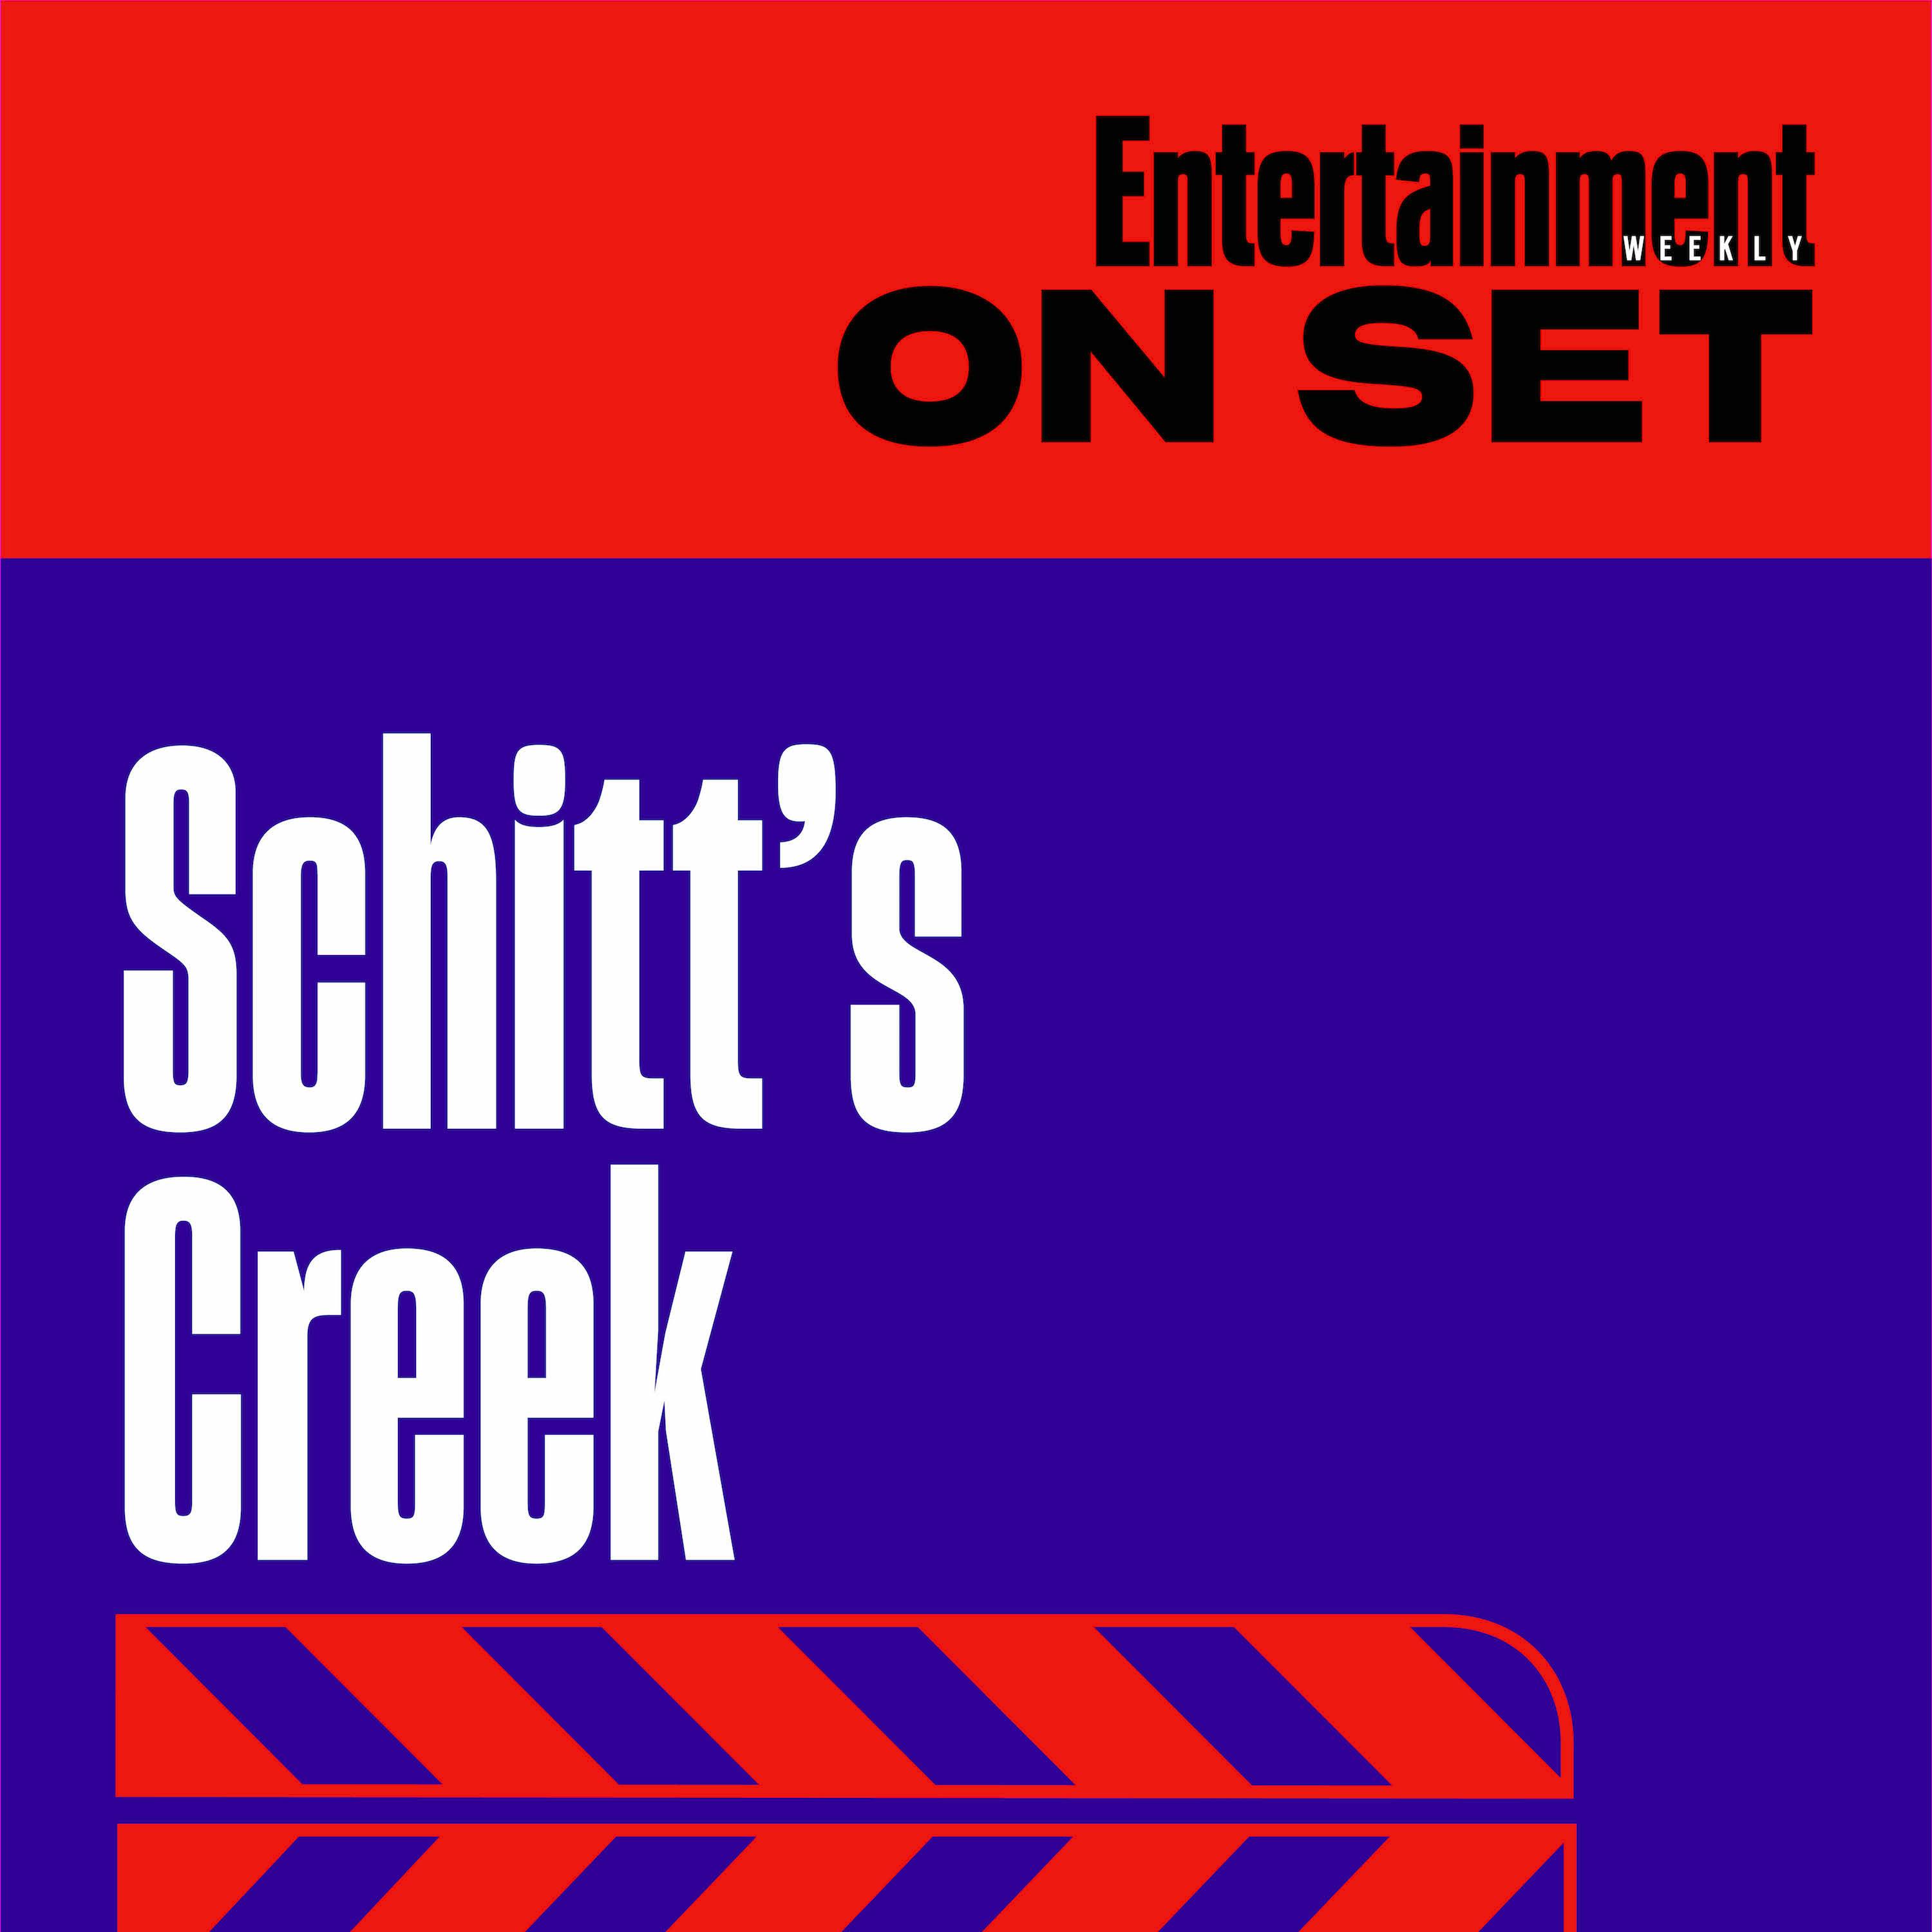 EW On Set: Schitt's Creek Episode 6.11 "The Bachelor Party"